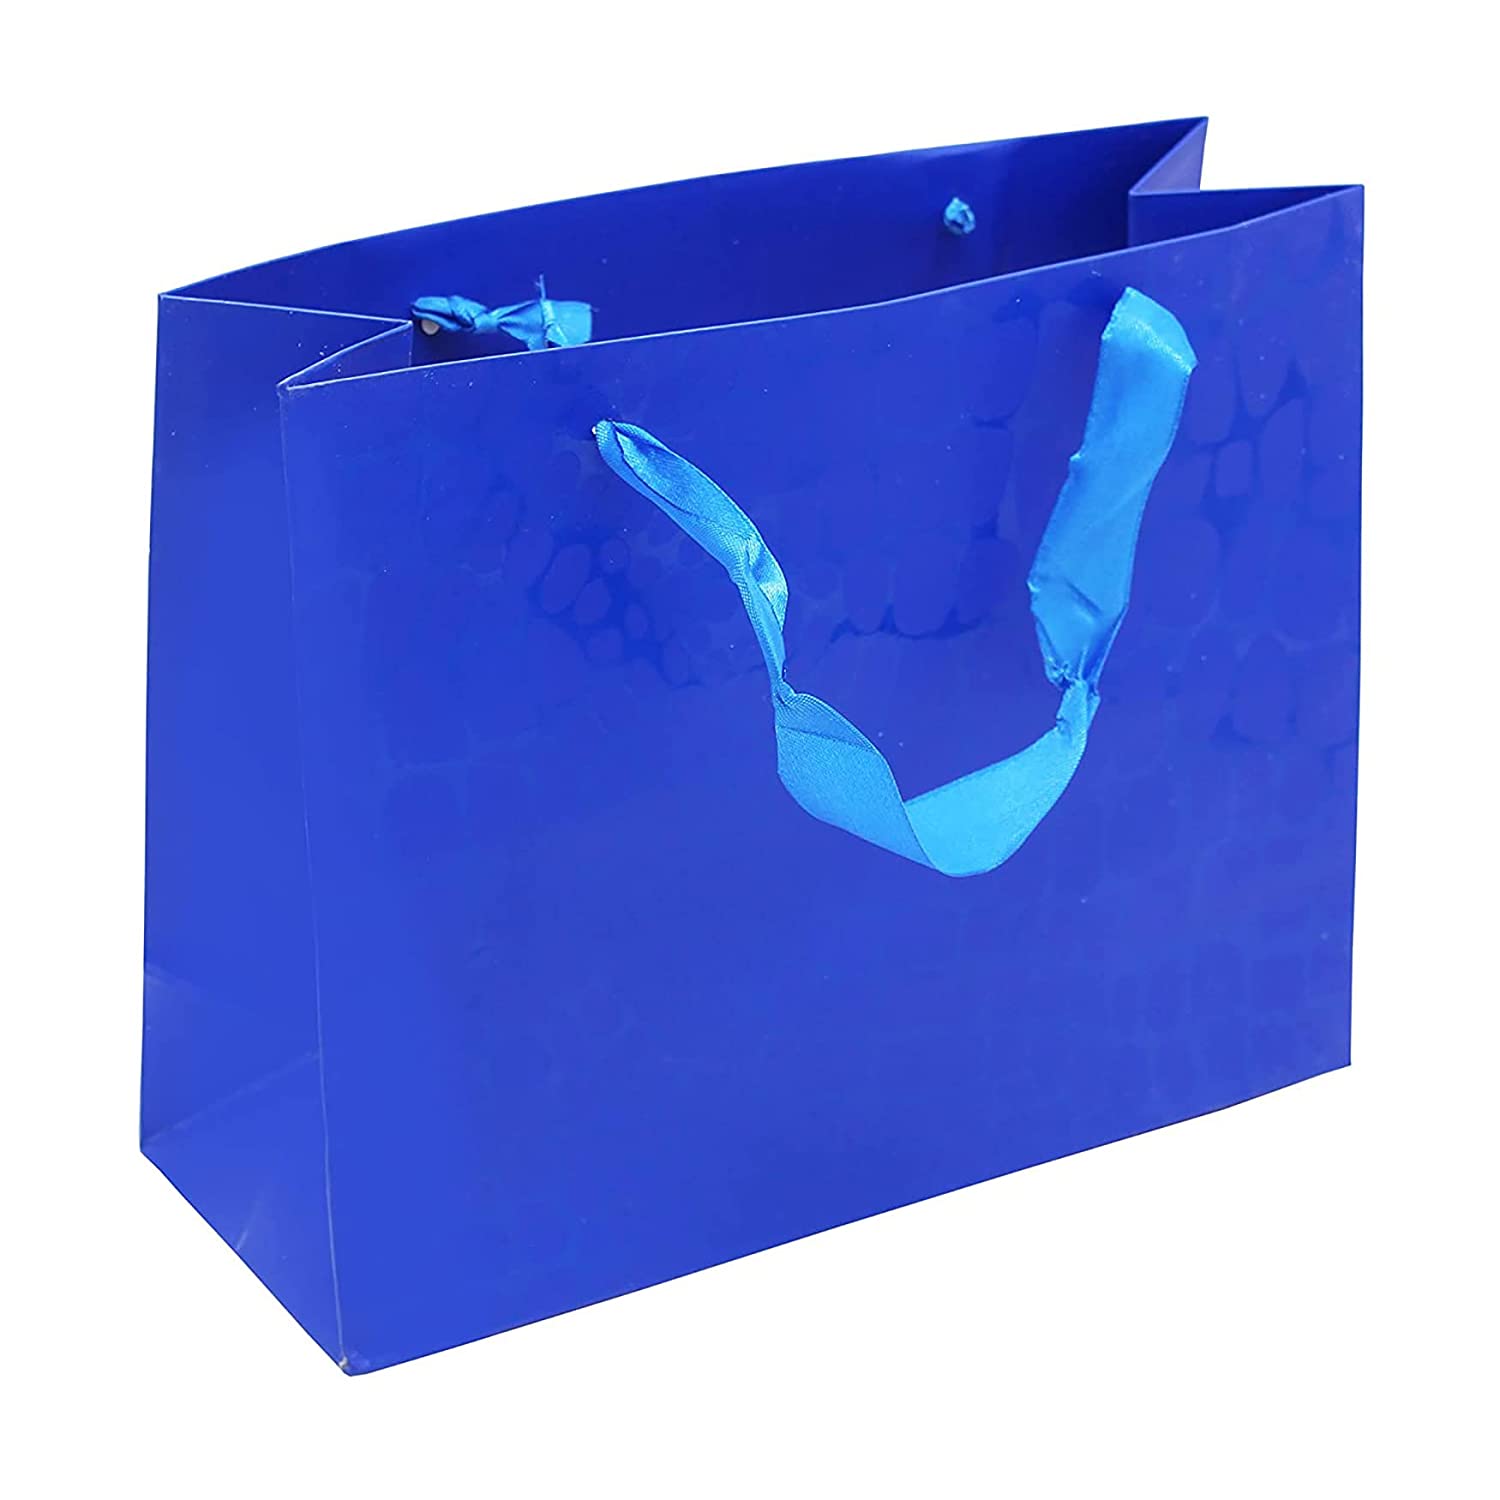 Buy DP Paper Gift Bags - Assorted Design, Big Online at Best Price of Rs  129 - bigbasket